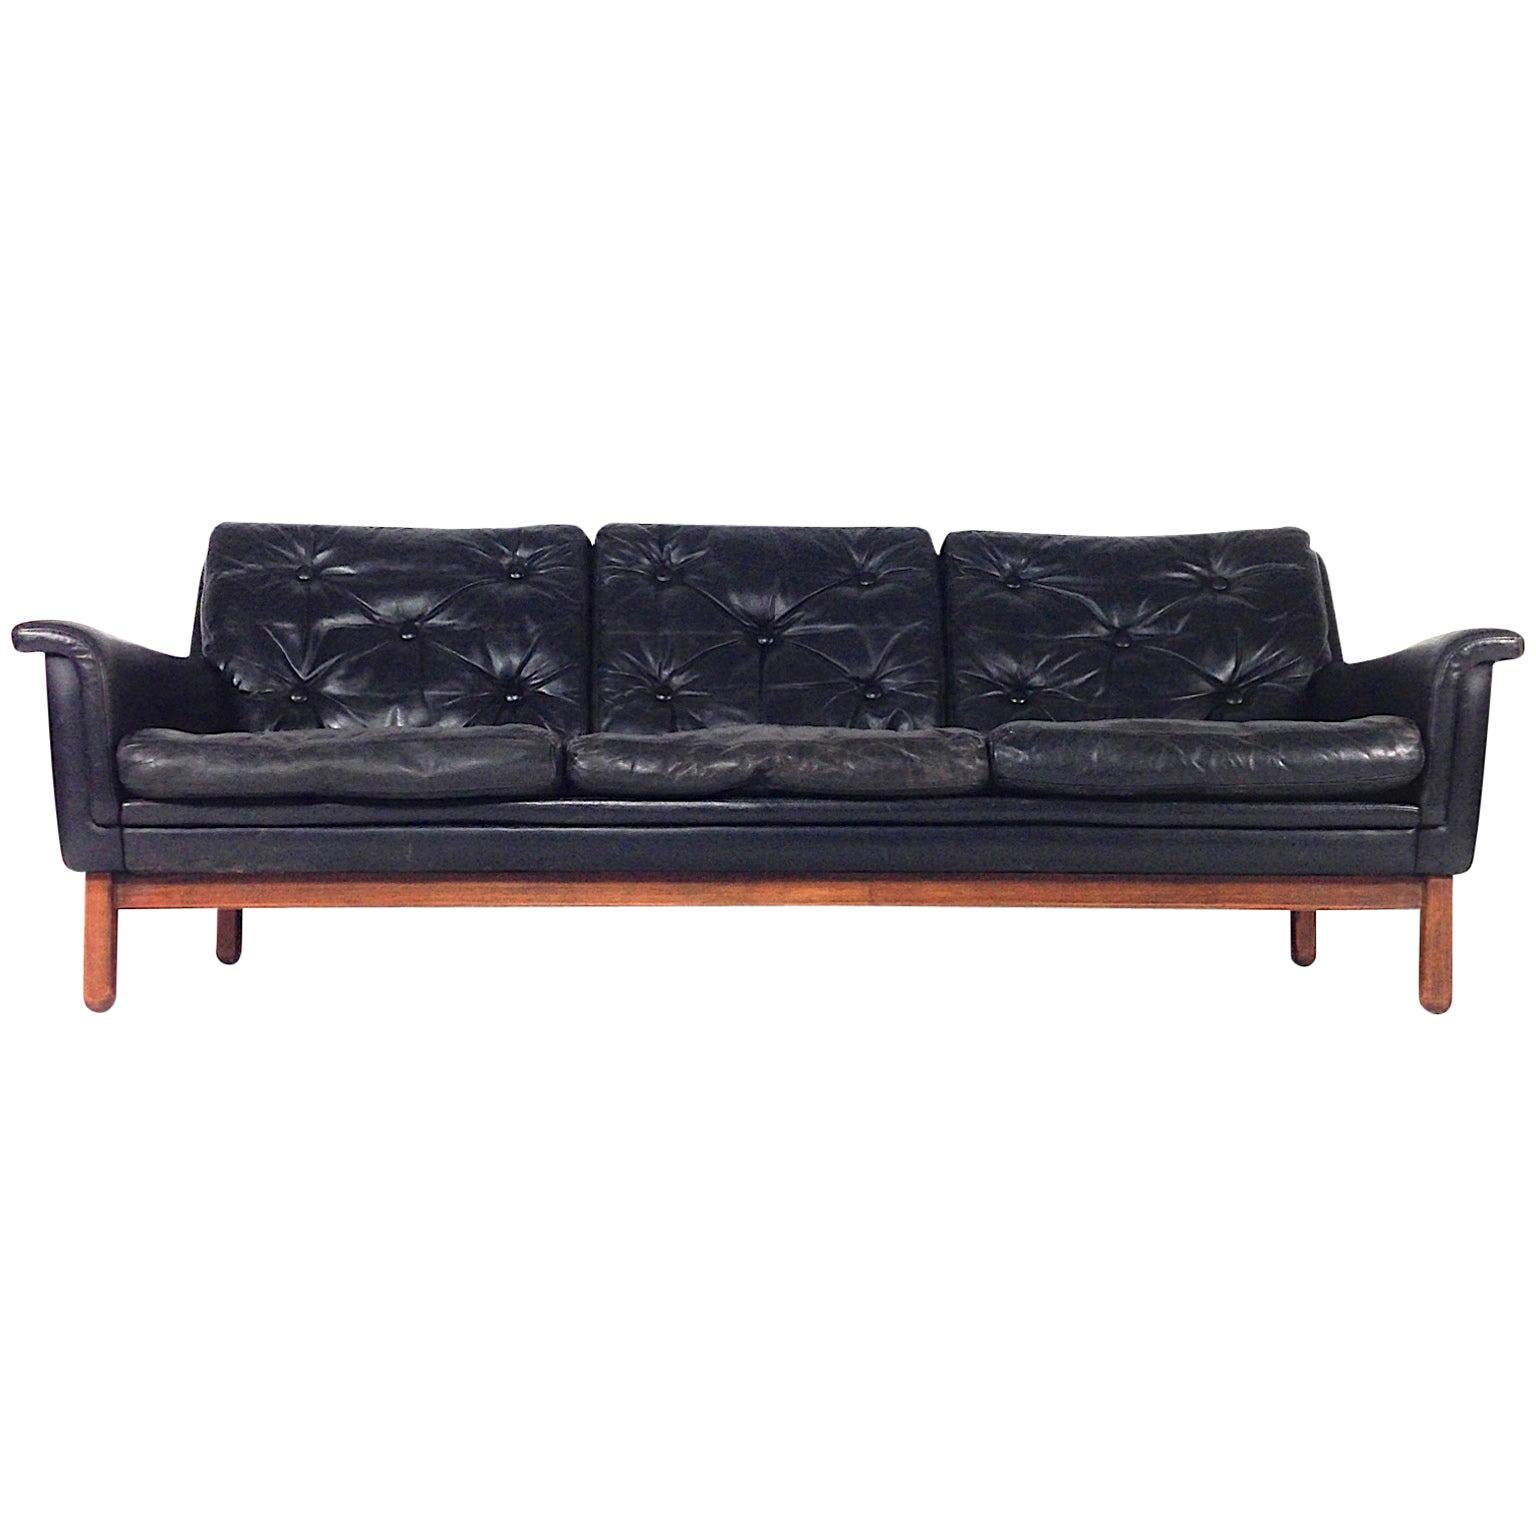 Danish Rosewood Black Leather Three-Seat Sofa, Denmark, 1950s-1960s